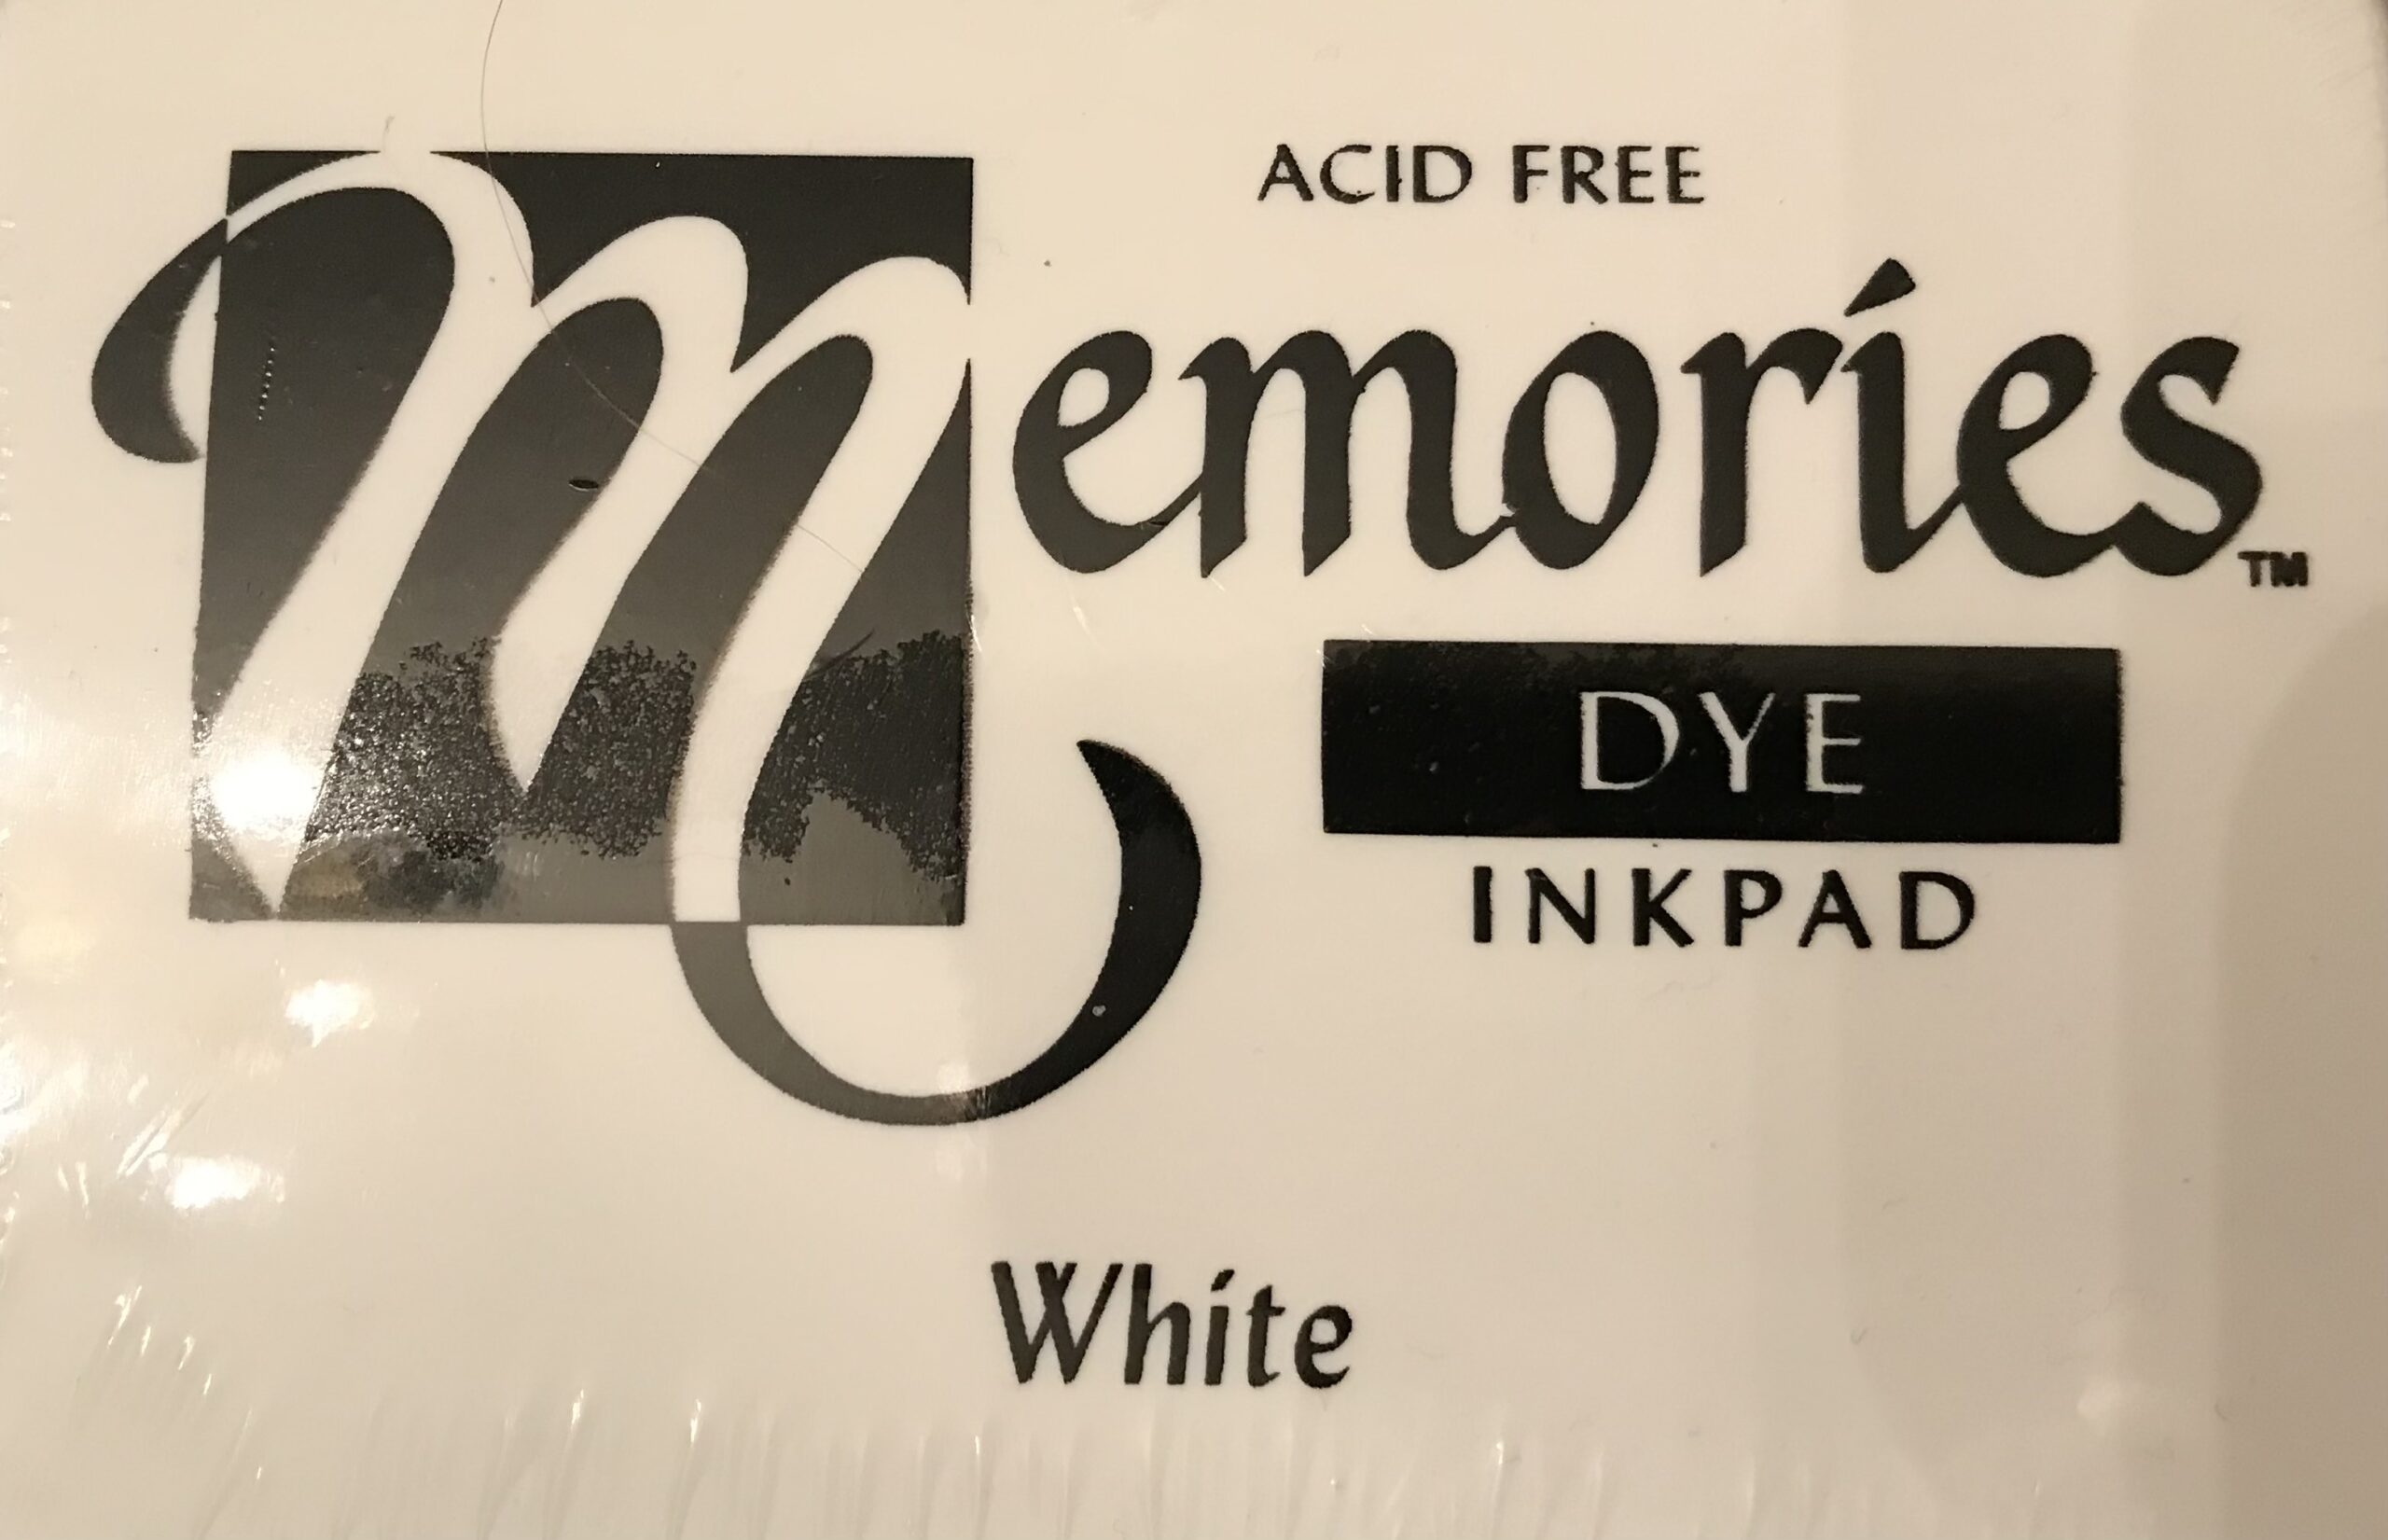 Memories White Dye Inkpad by Superior